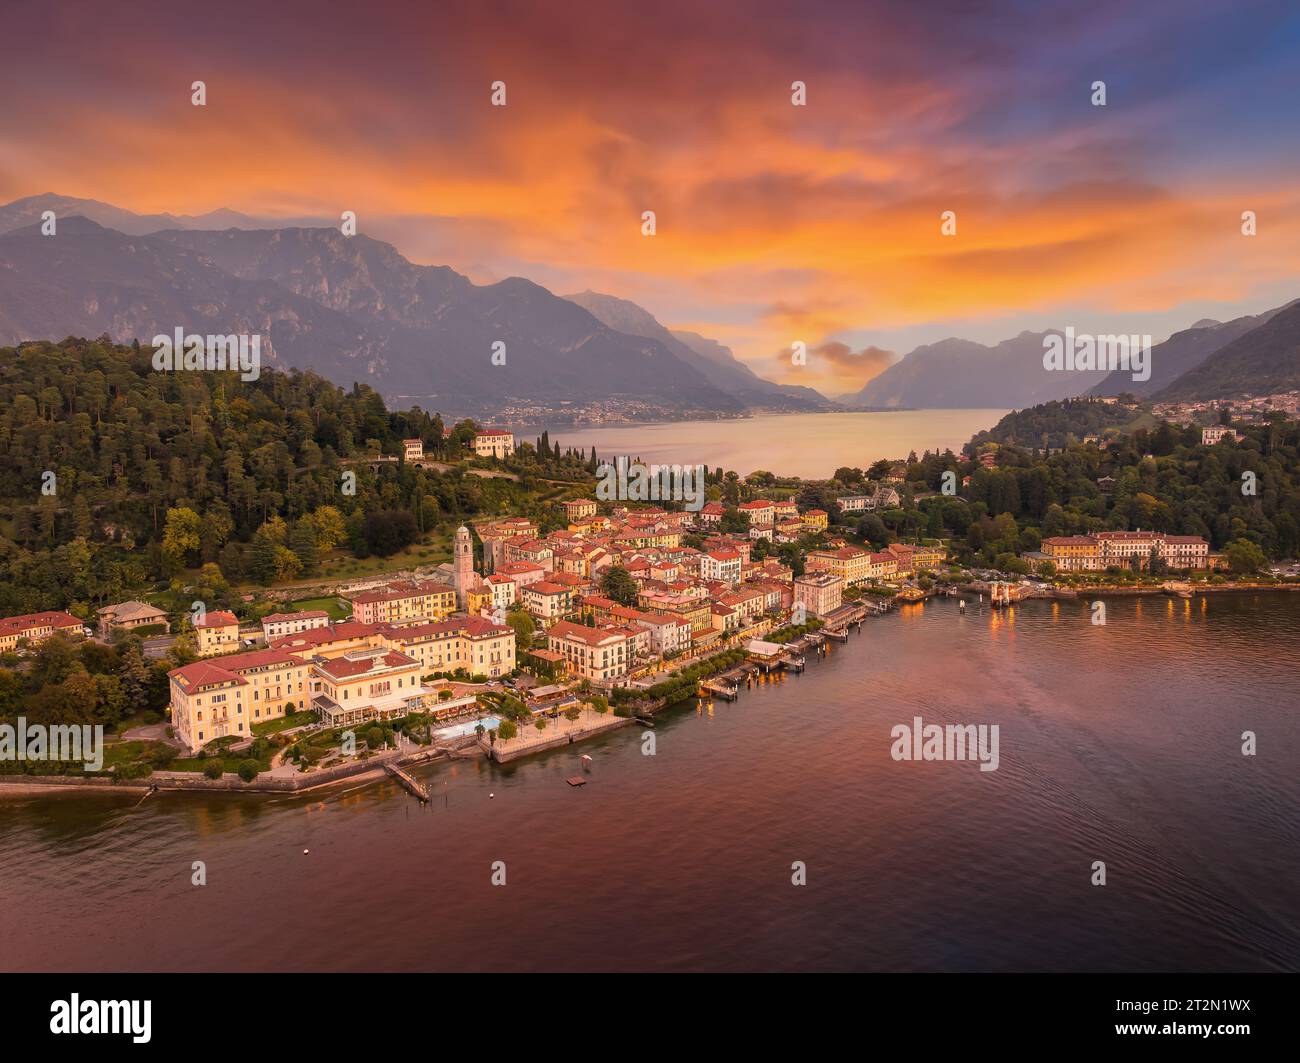 Landschaft mit Bellagio Stadt in Como Seenregion, Italien Stockfoto